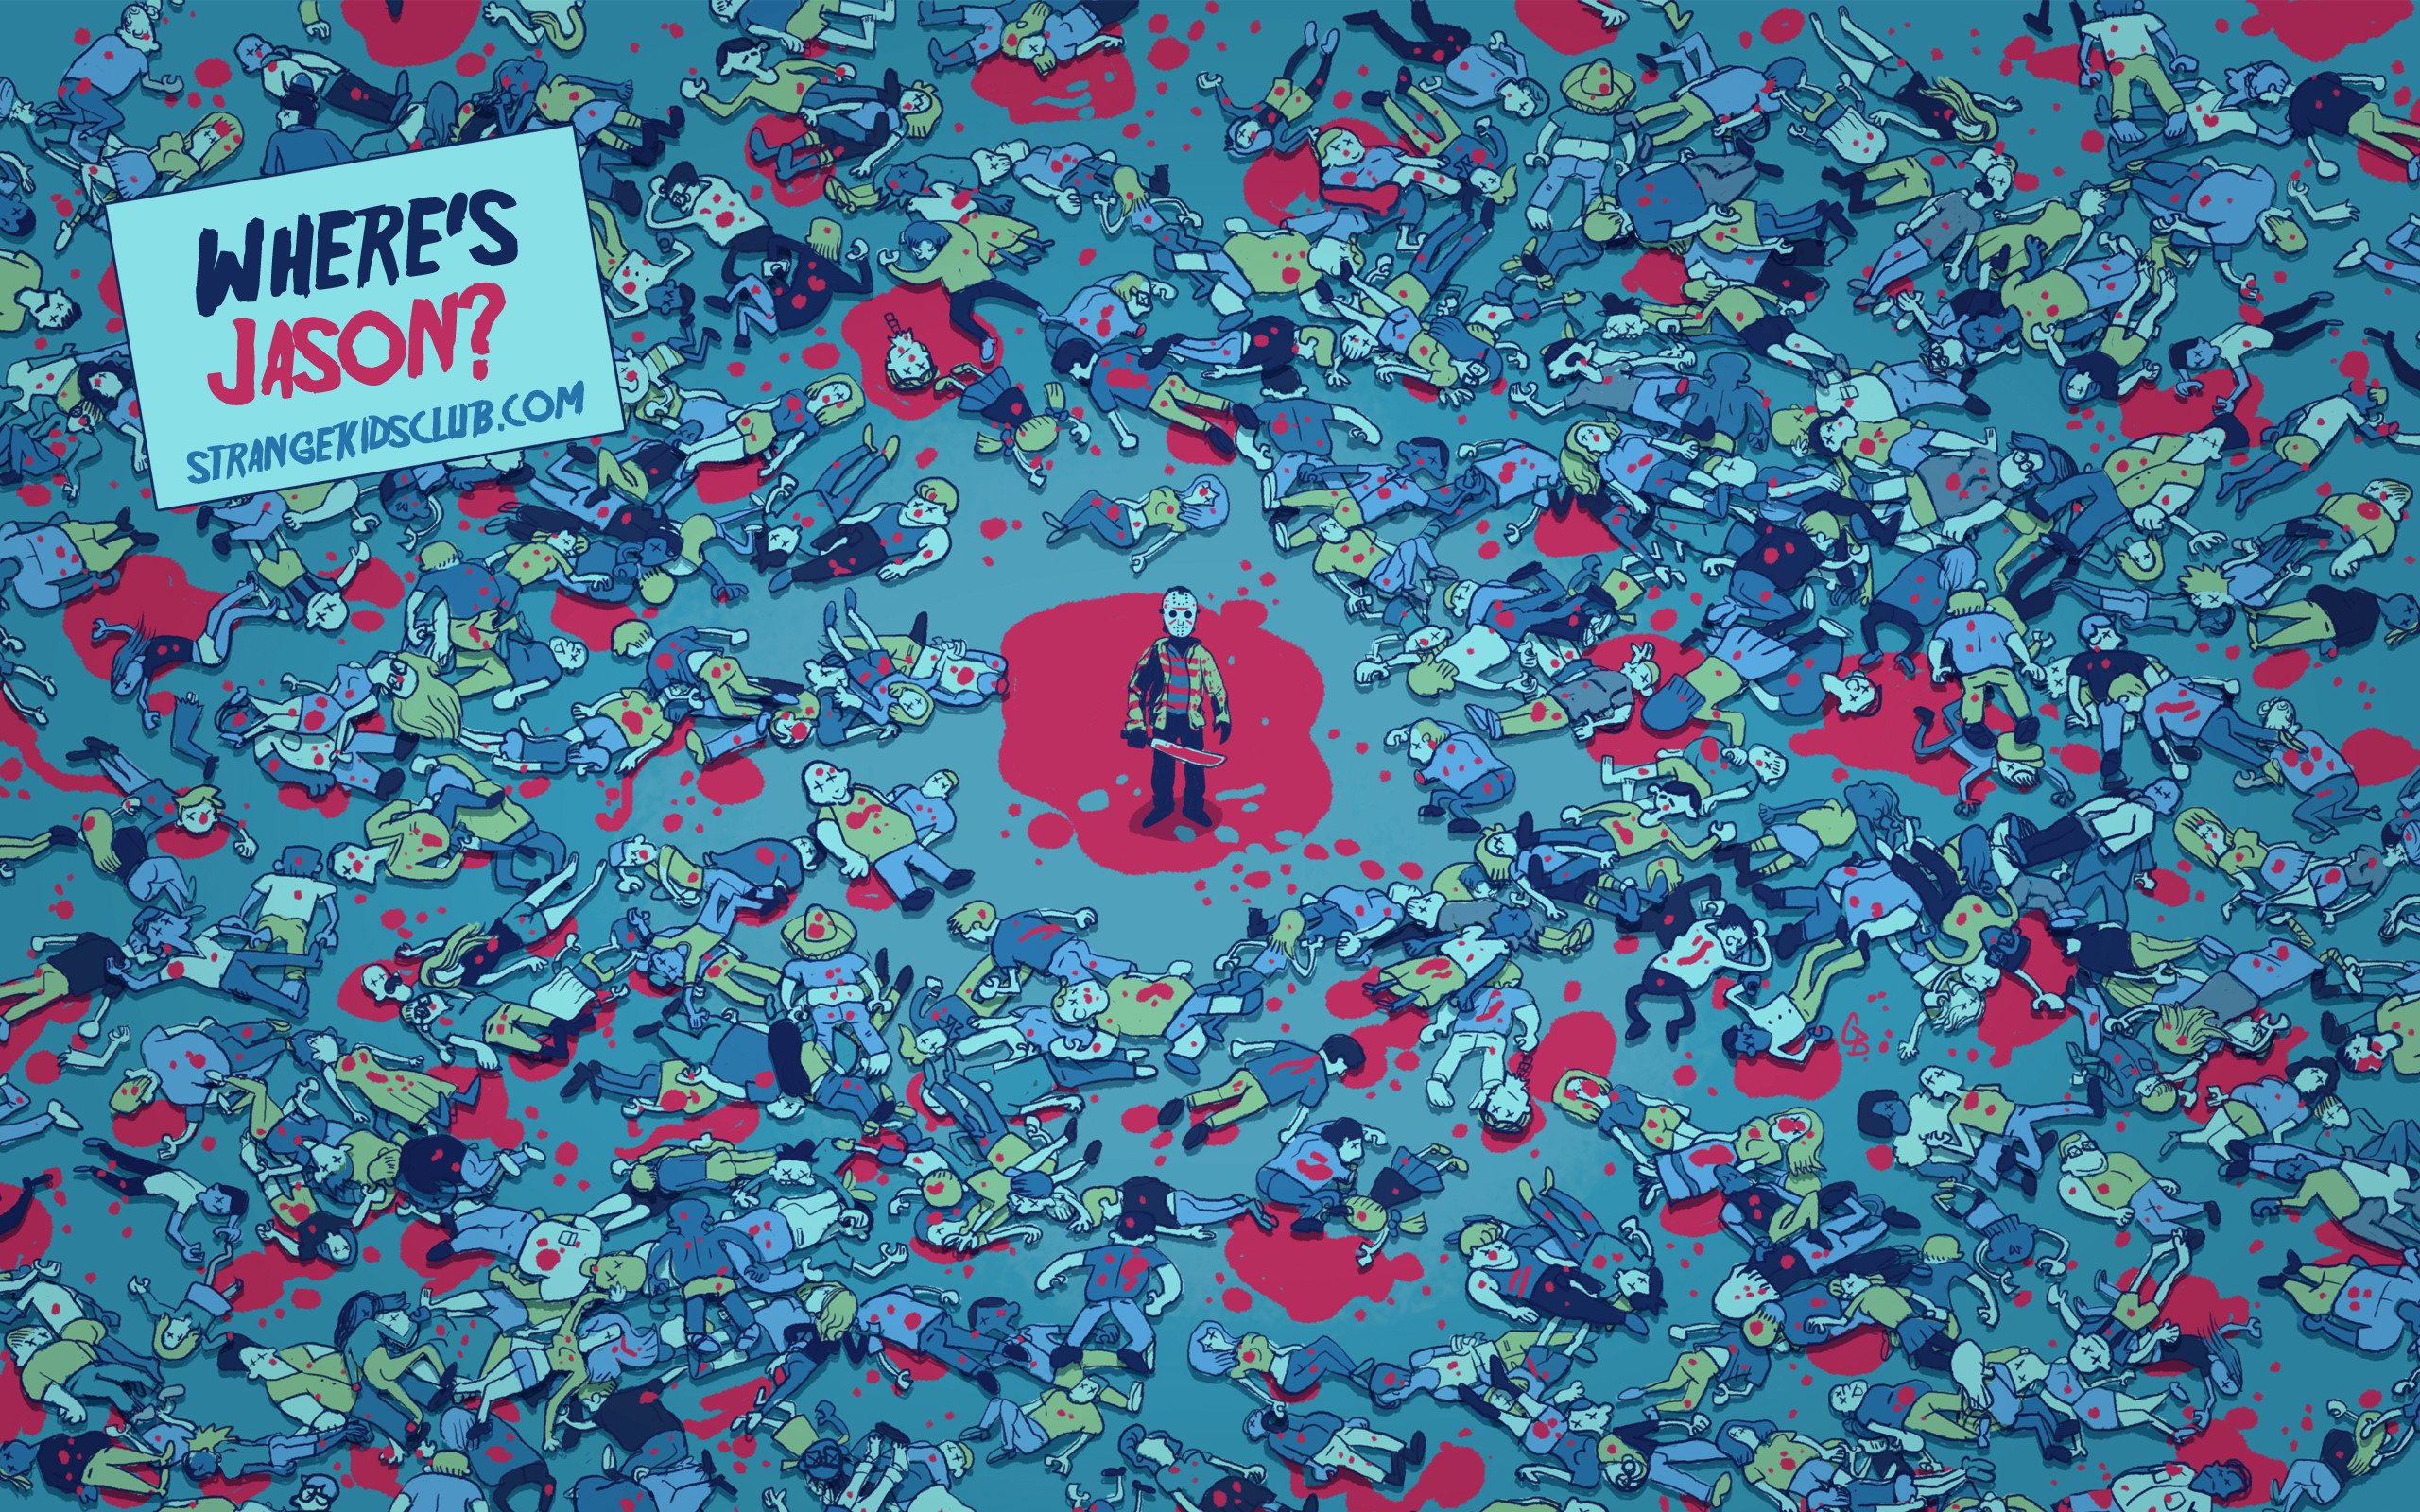 2560x1600 FREE 'Where's Jason?' Wallpaper by Glen Brogran to Celebrate Friday the 13th